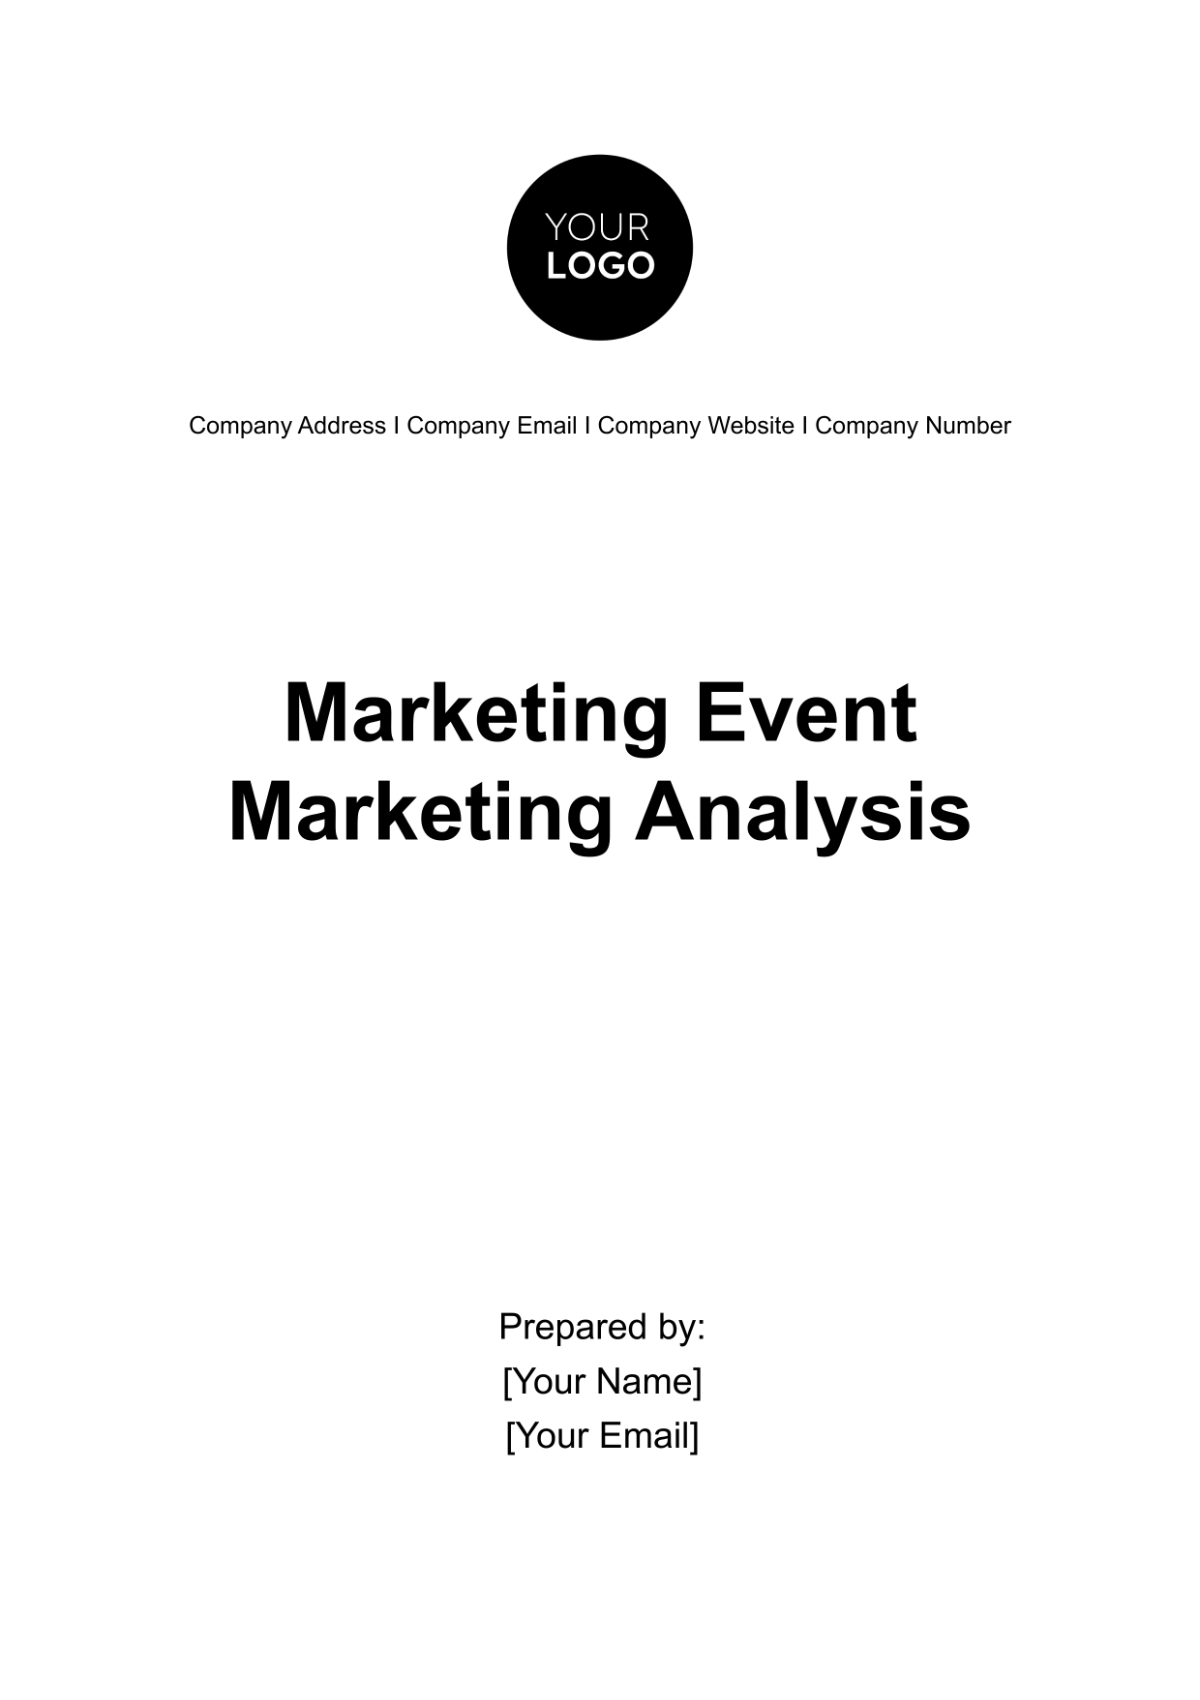 Free Marketing Event Marketing Analysis Template